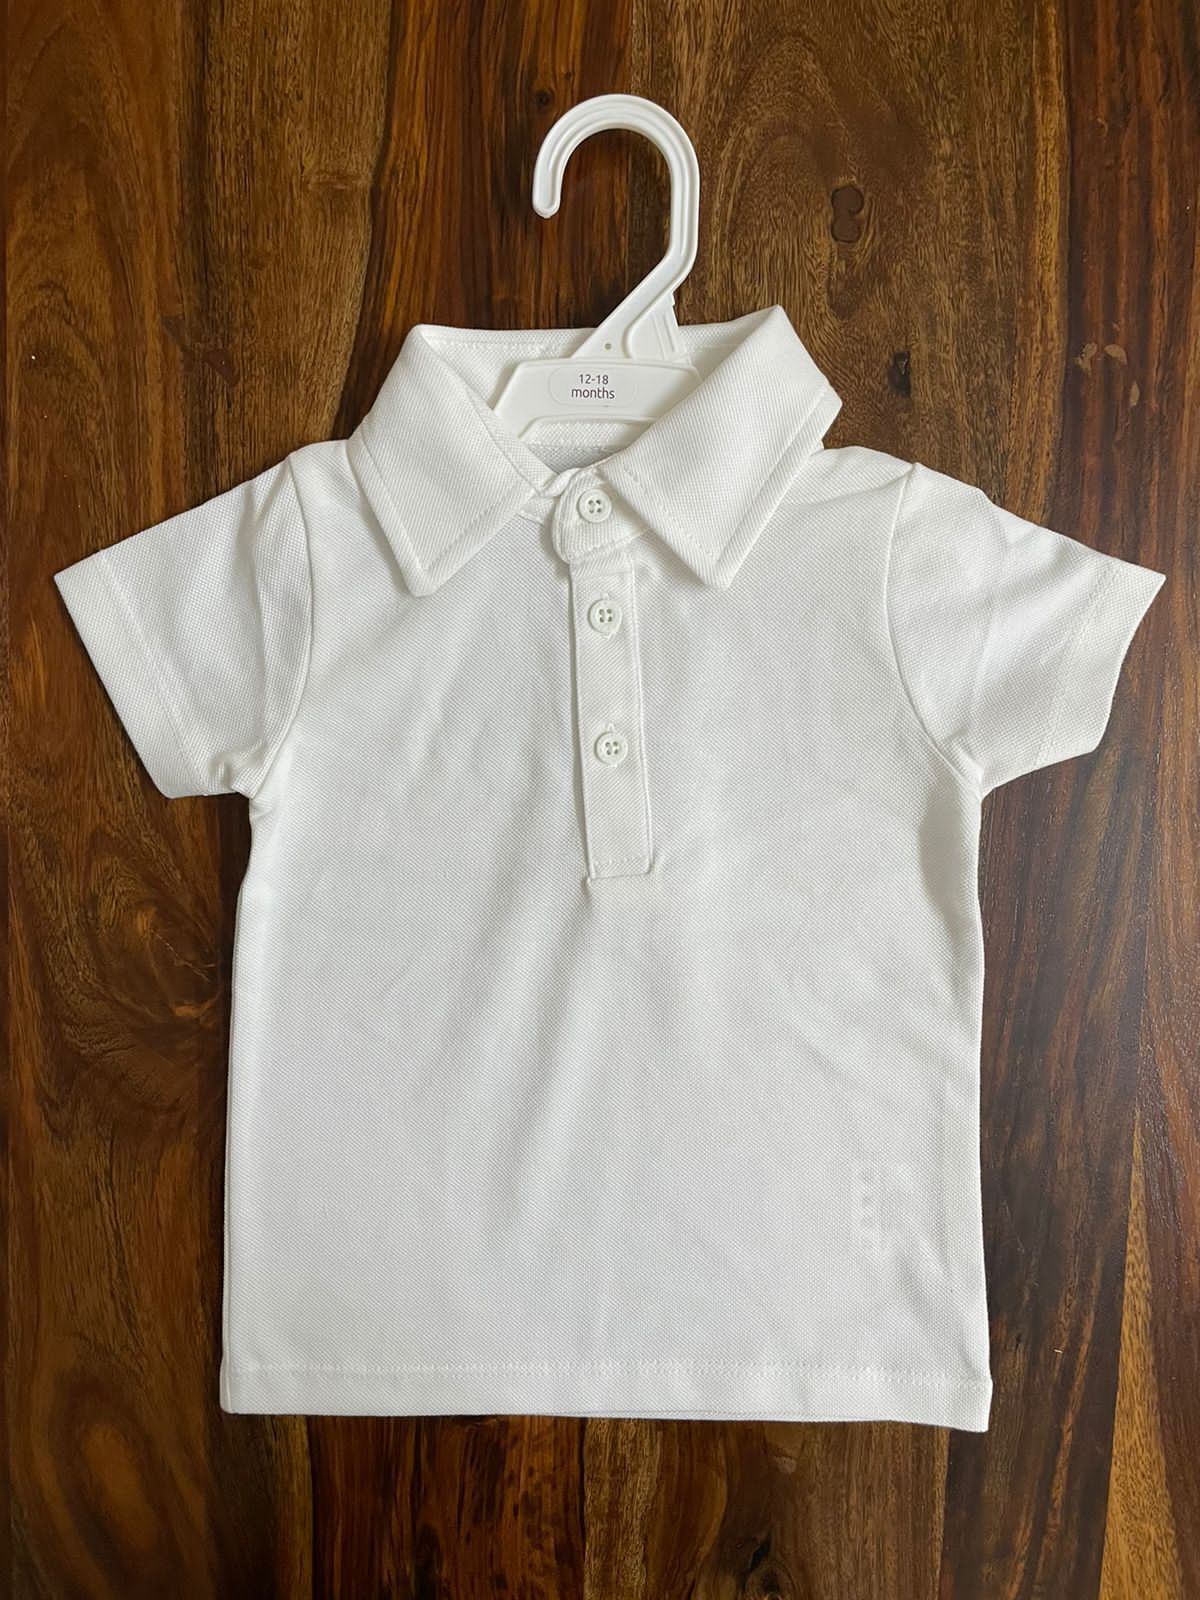 BabyNeeds Daily Wear Plain Collar Cotton T-Shirts Unisex WHITE COLOR